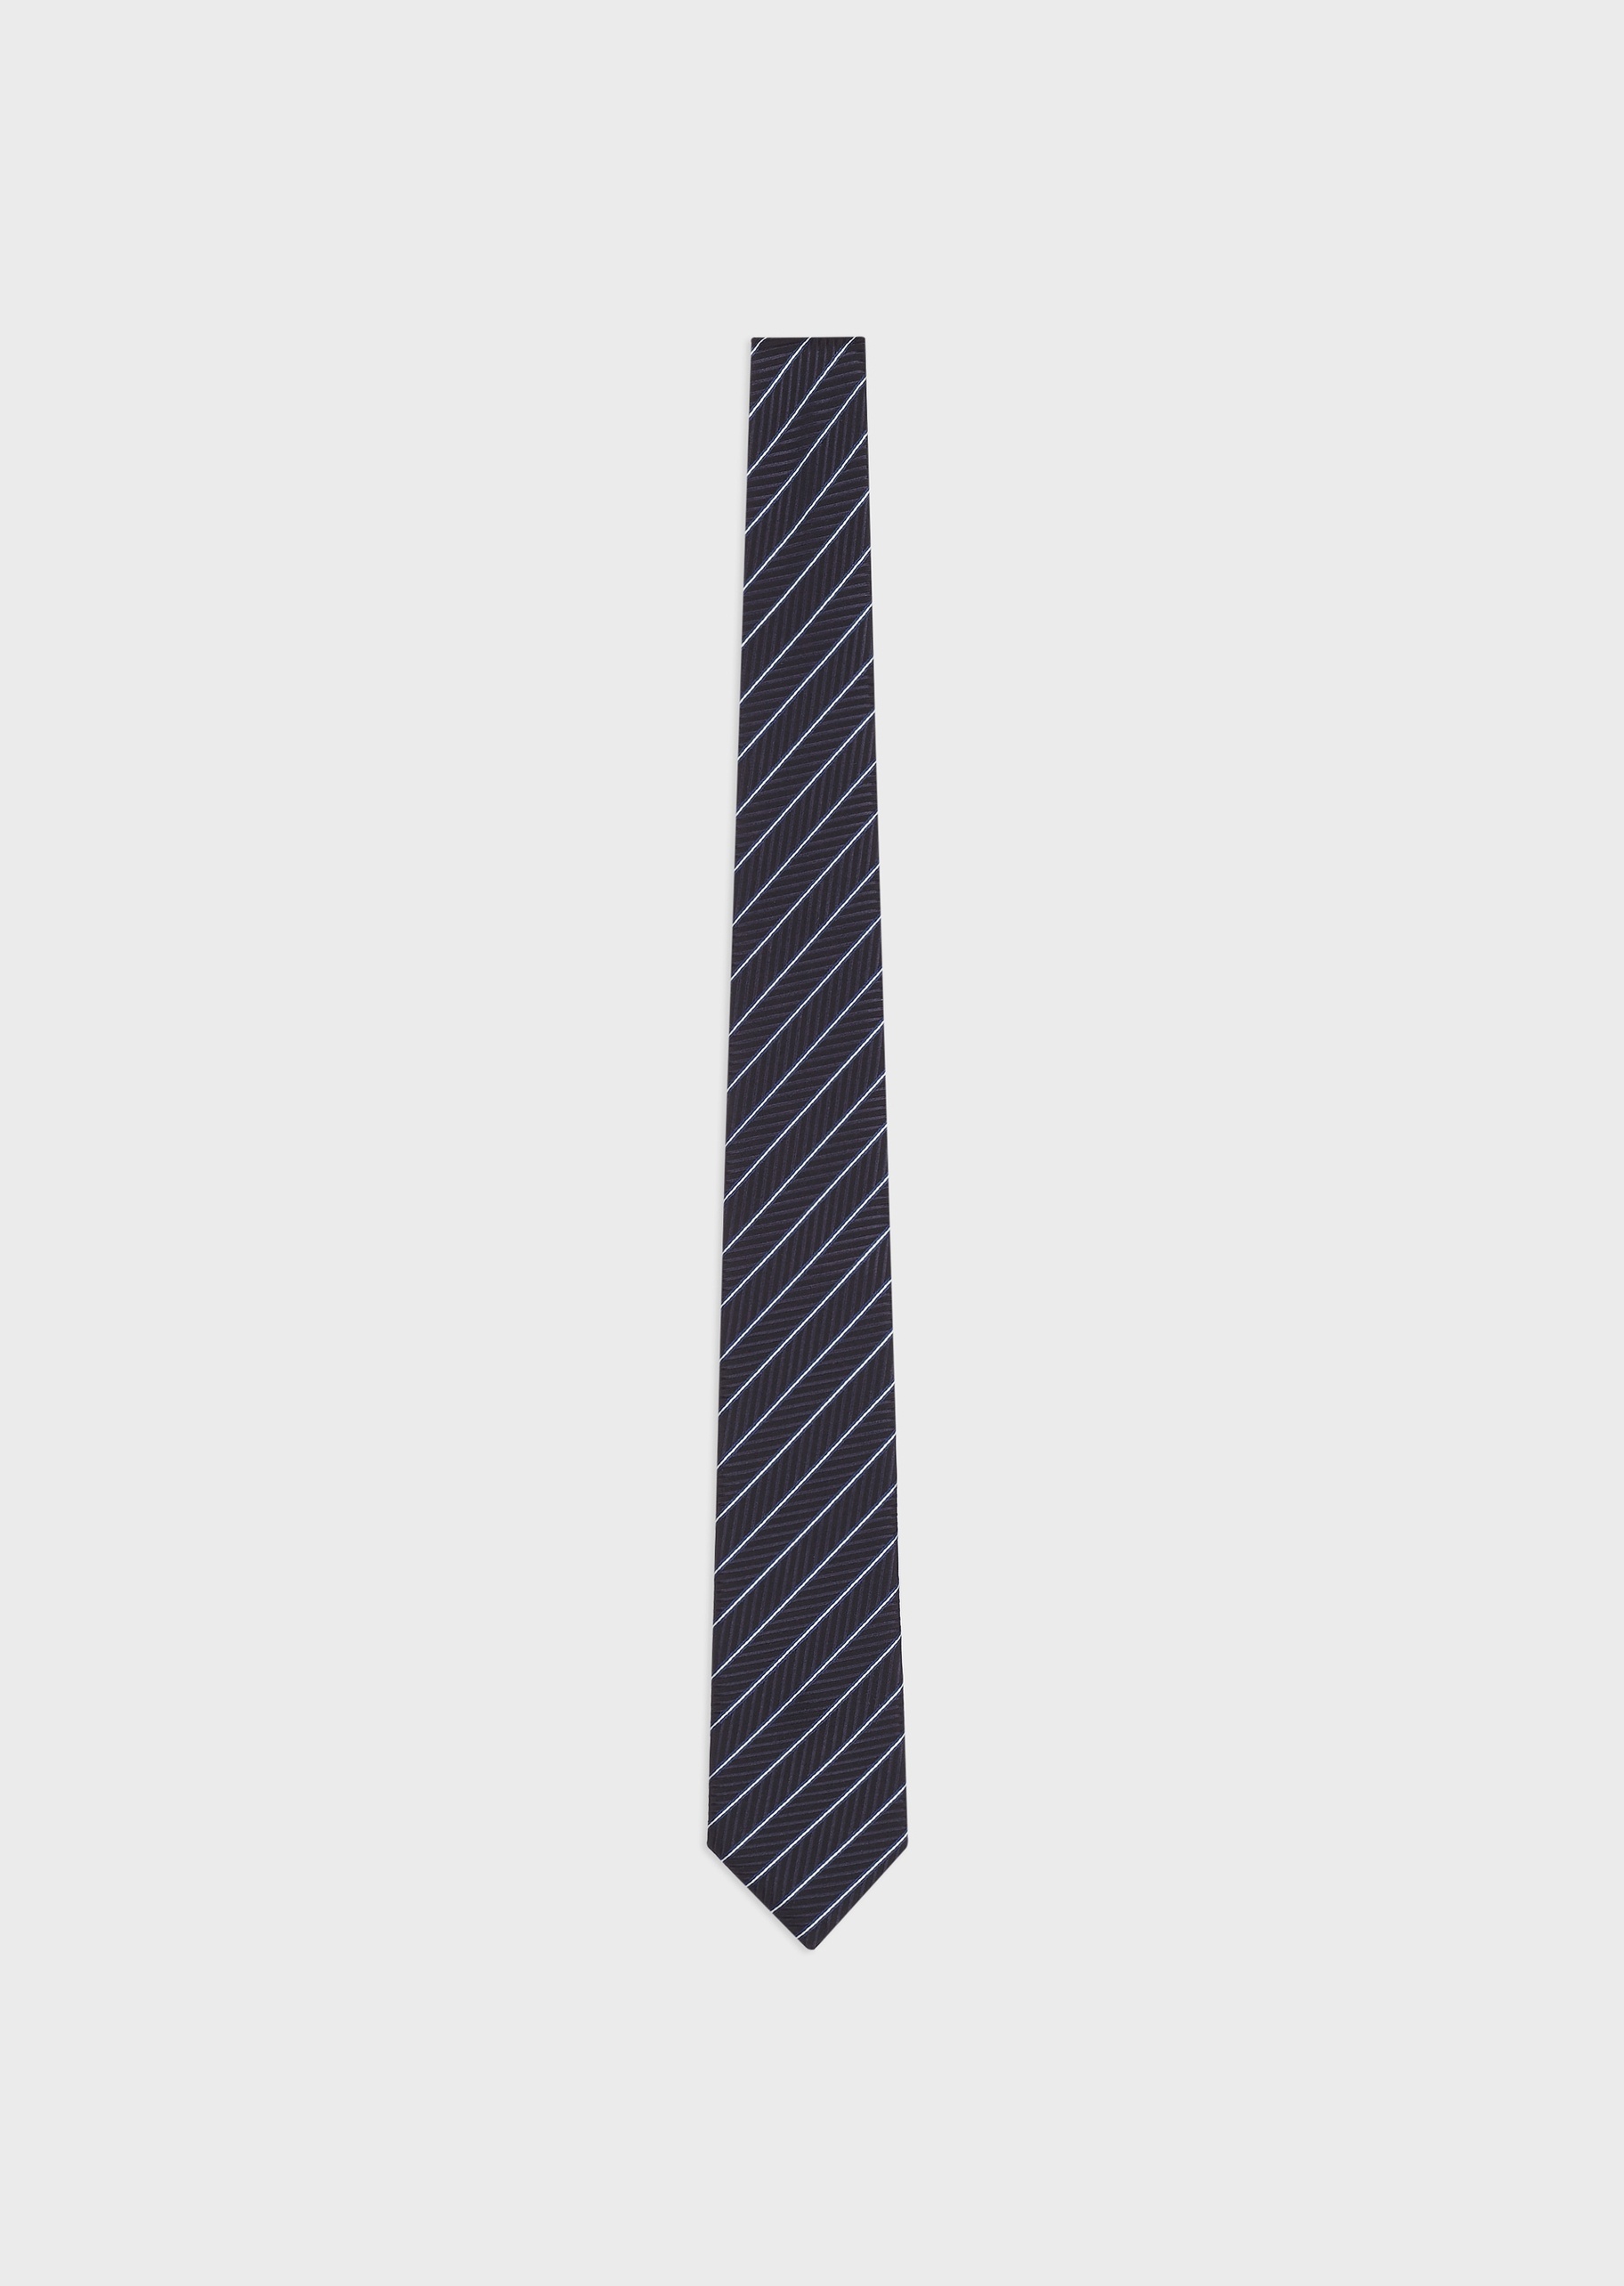 Giorgio Armani 提花图案纯真丝领带